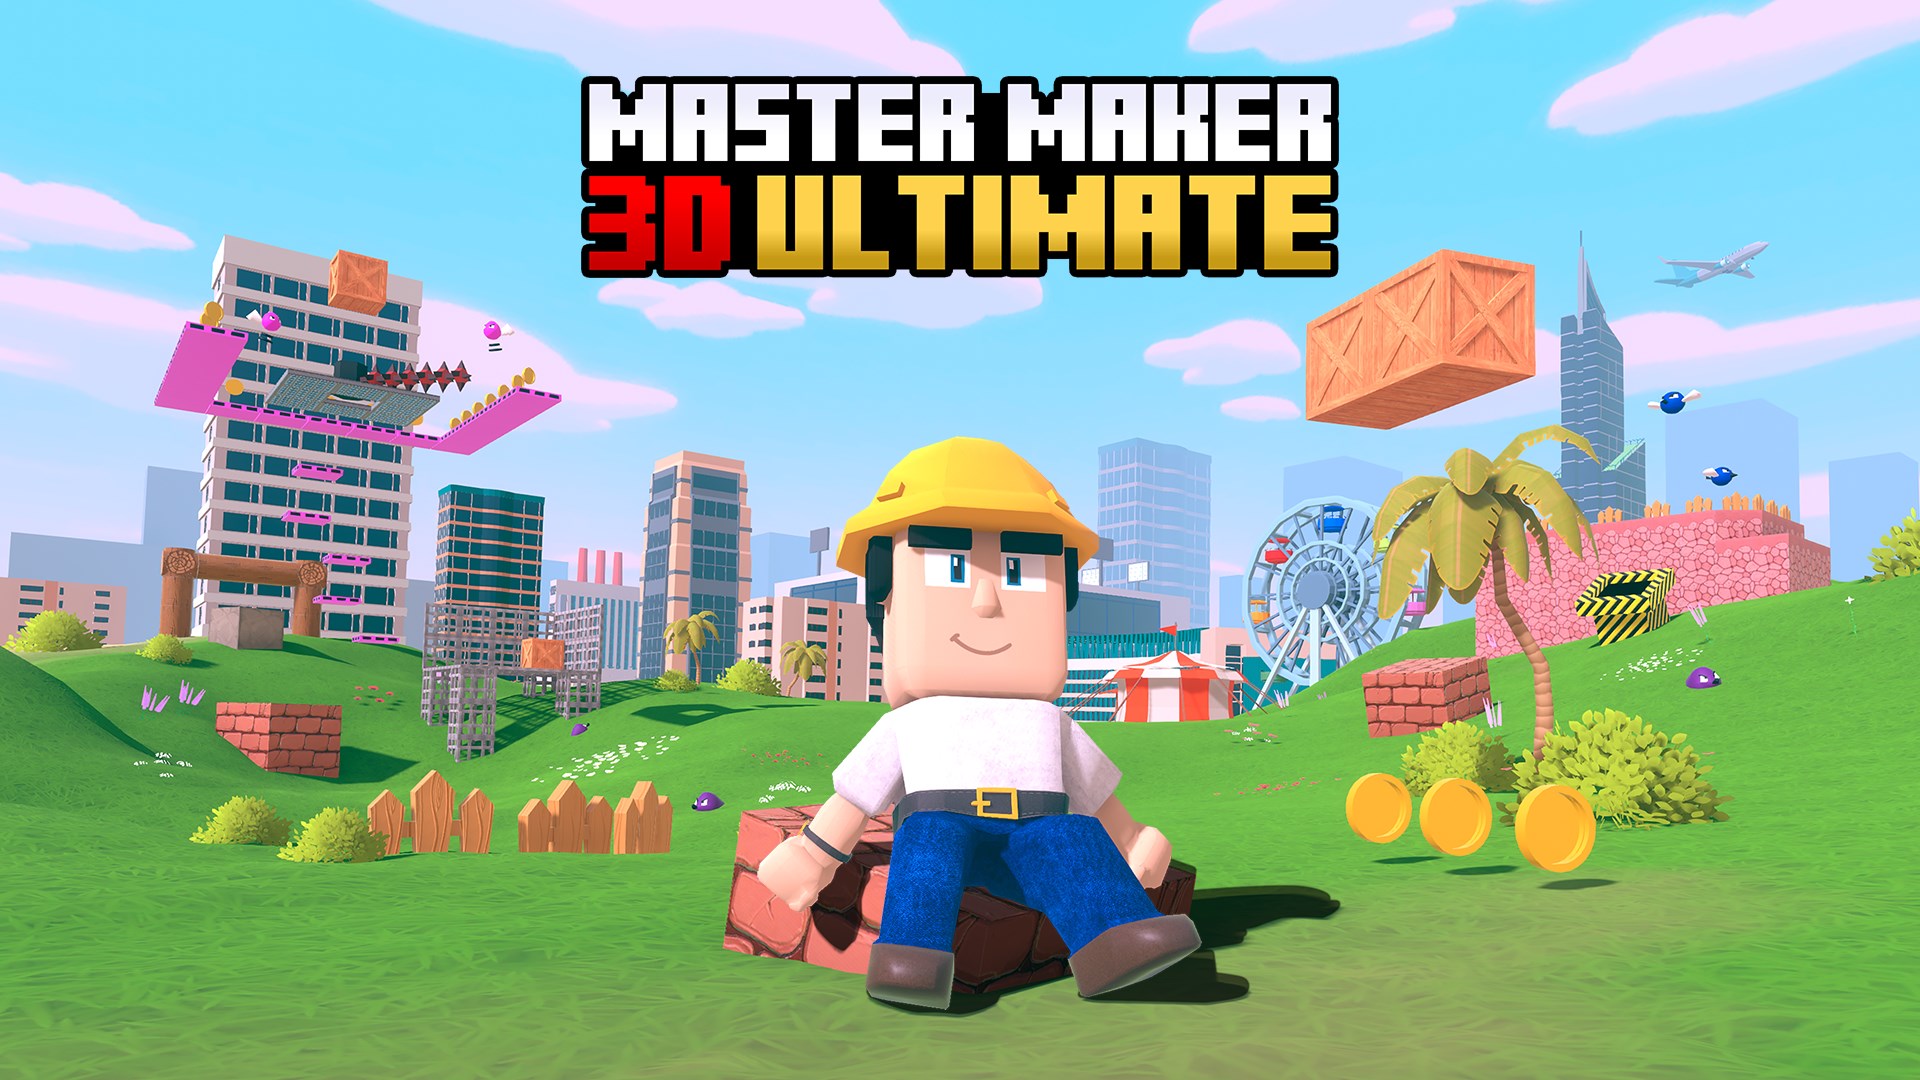 Master Maker 3D Ultimate screenshot 65292